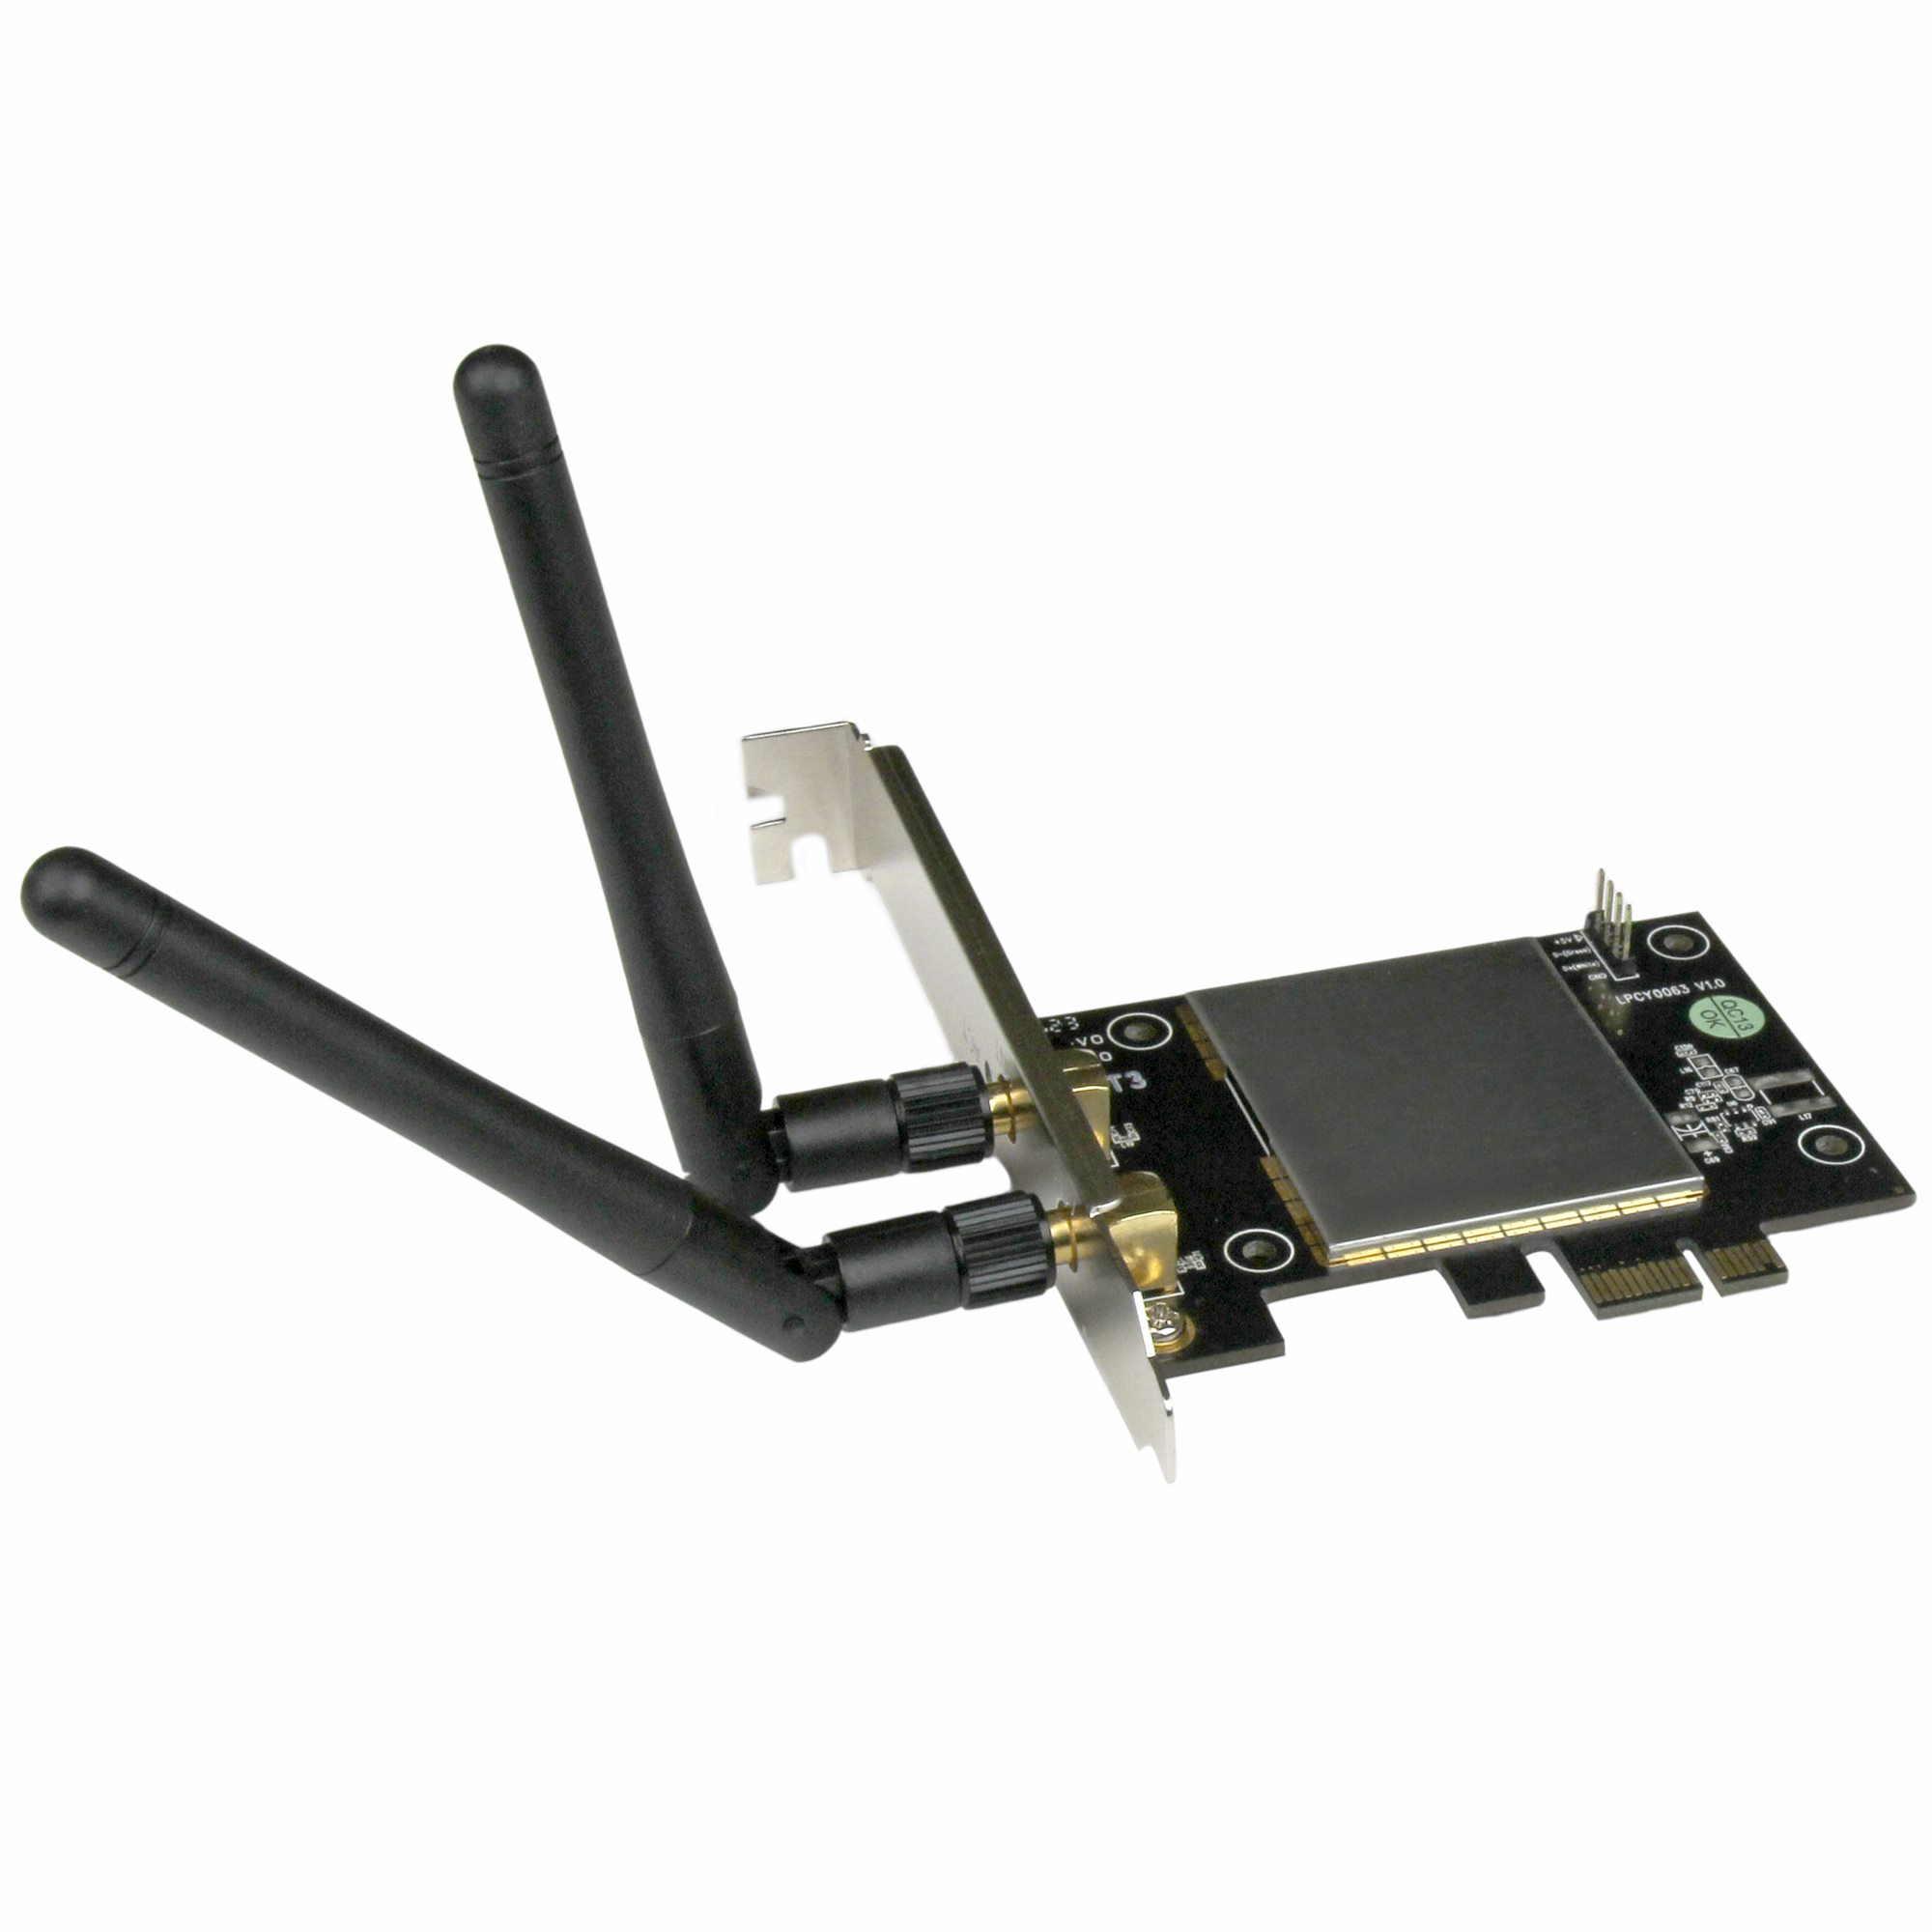 Ac600 Wireless Dual Band PCI Express Adapter. 802.11AC адаптер. ASUS 802.11G Network Adapter PCI. Wi-Fi адаптер STARTECH.com usb300wn2x2d. 5ггц адаптер